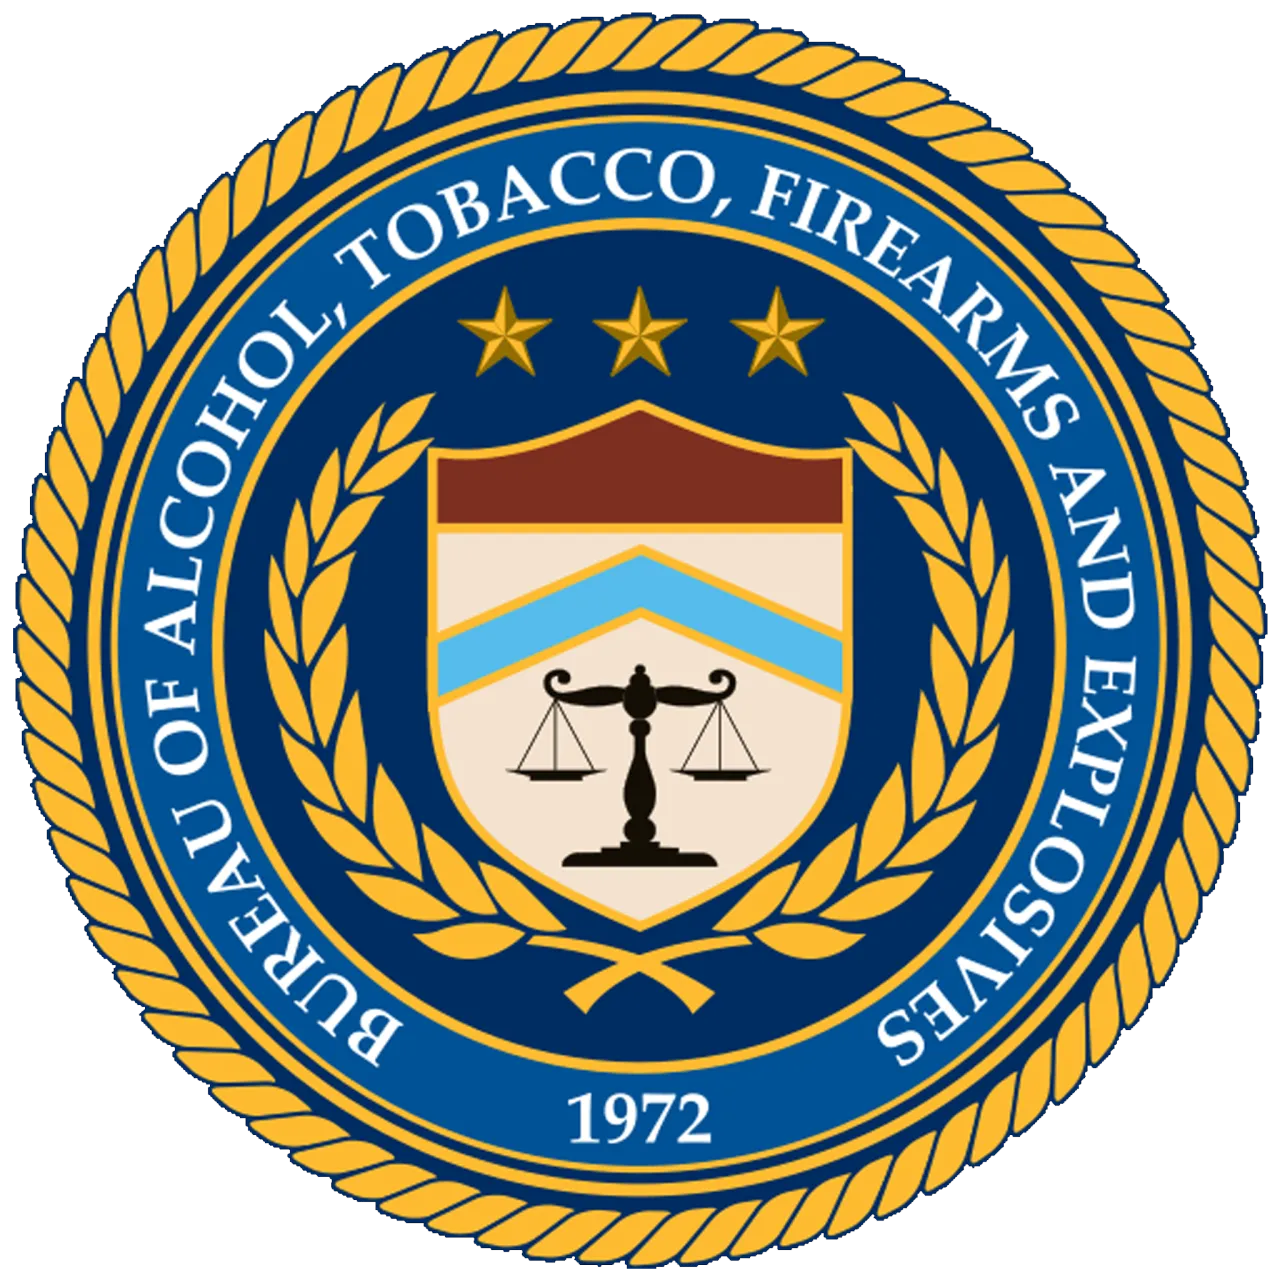 ATF (Bureau of Alcohol, Tobacco, Firearms and Explosives) Logo